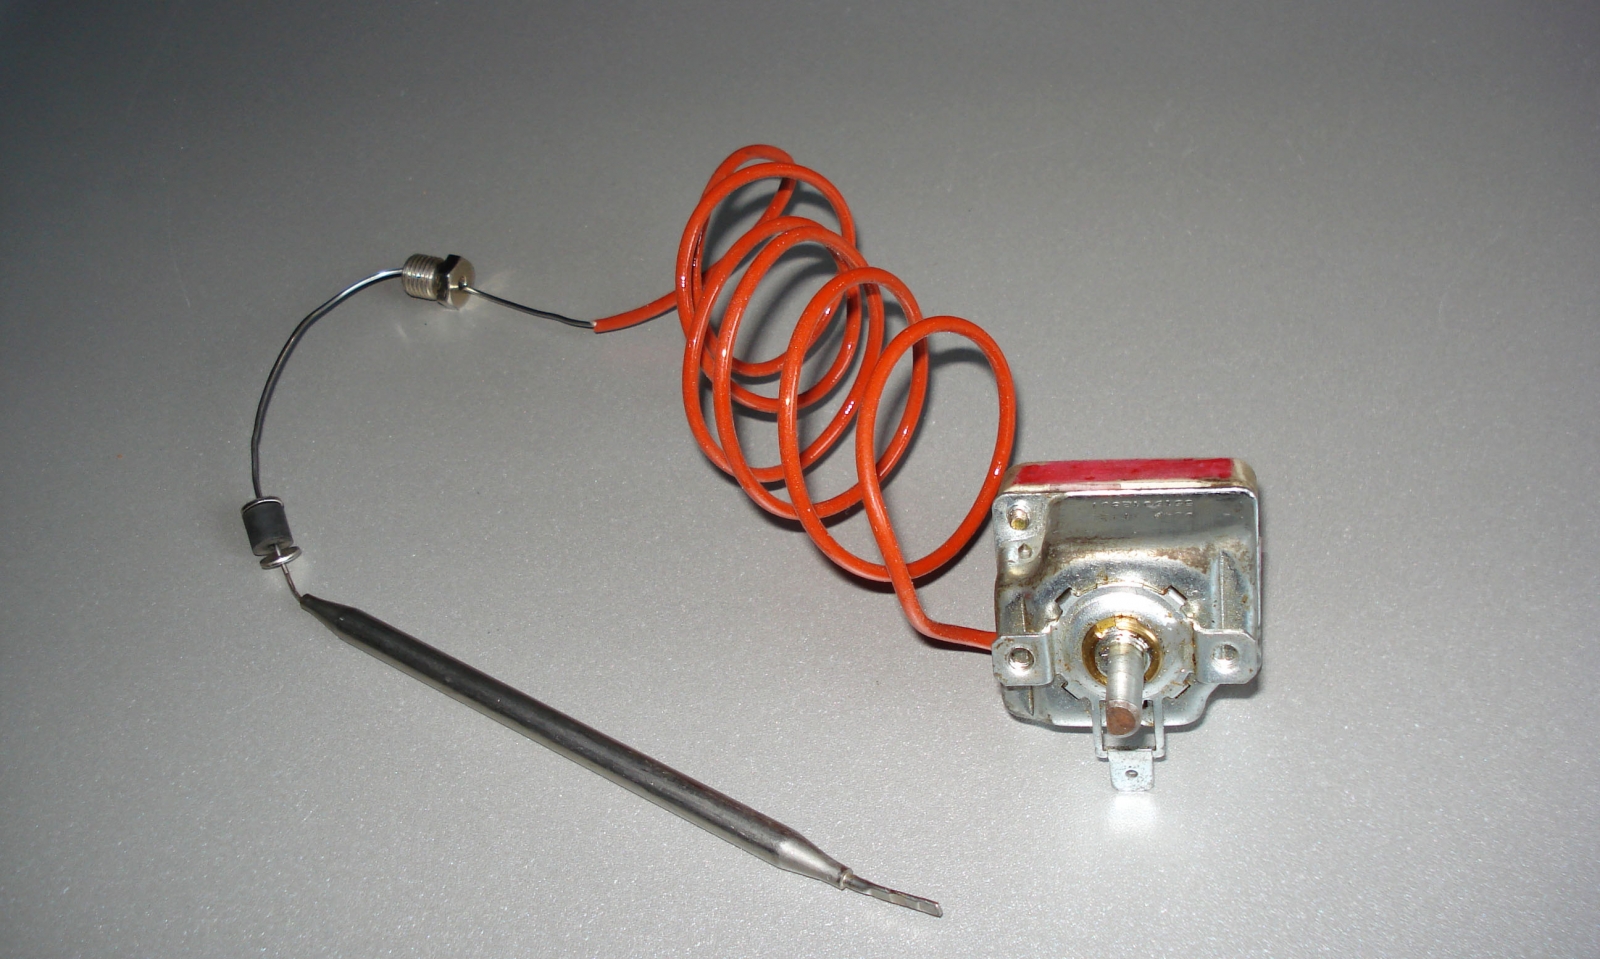 Termostat camera coacere - Cuptor - Inoxtrend